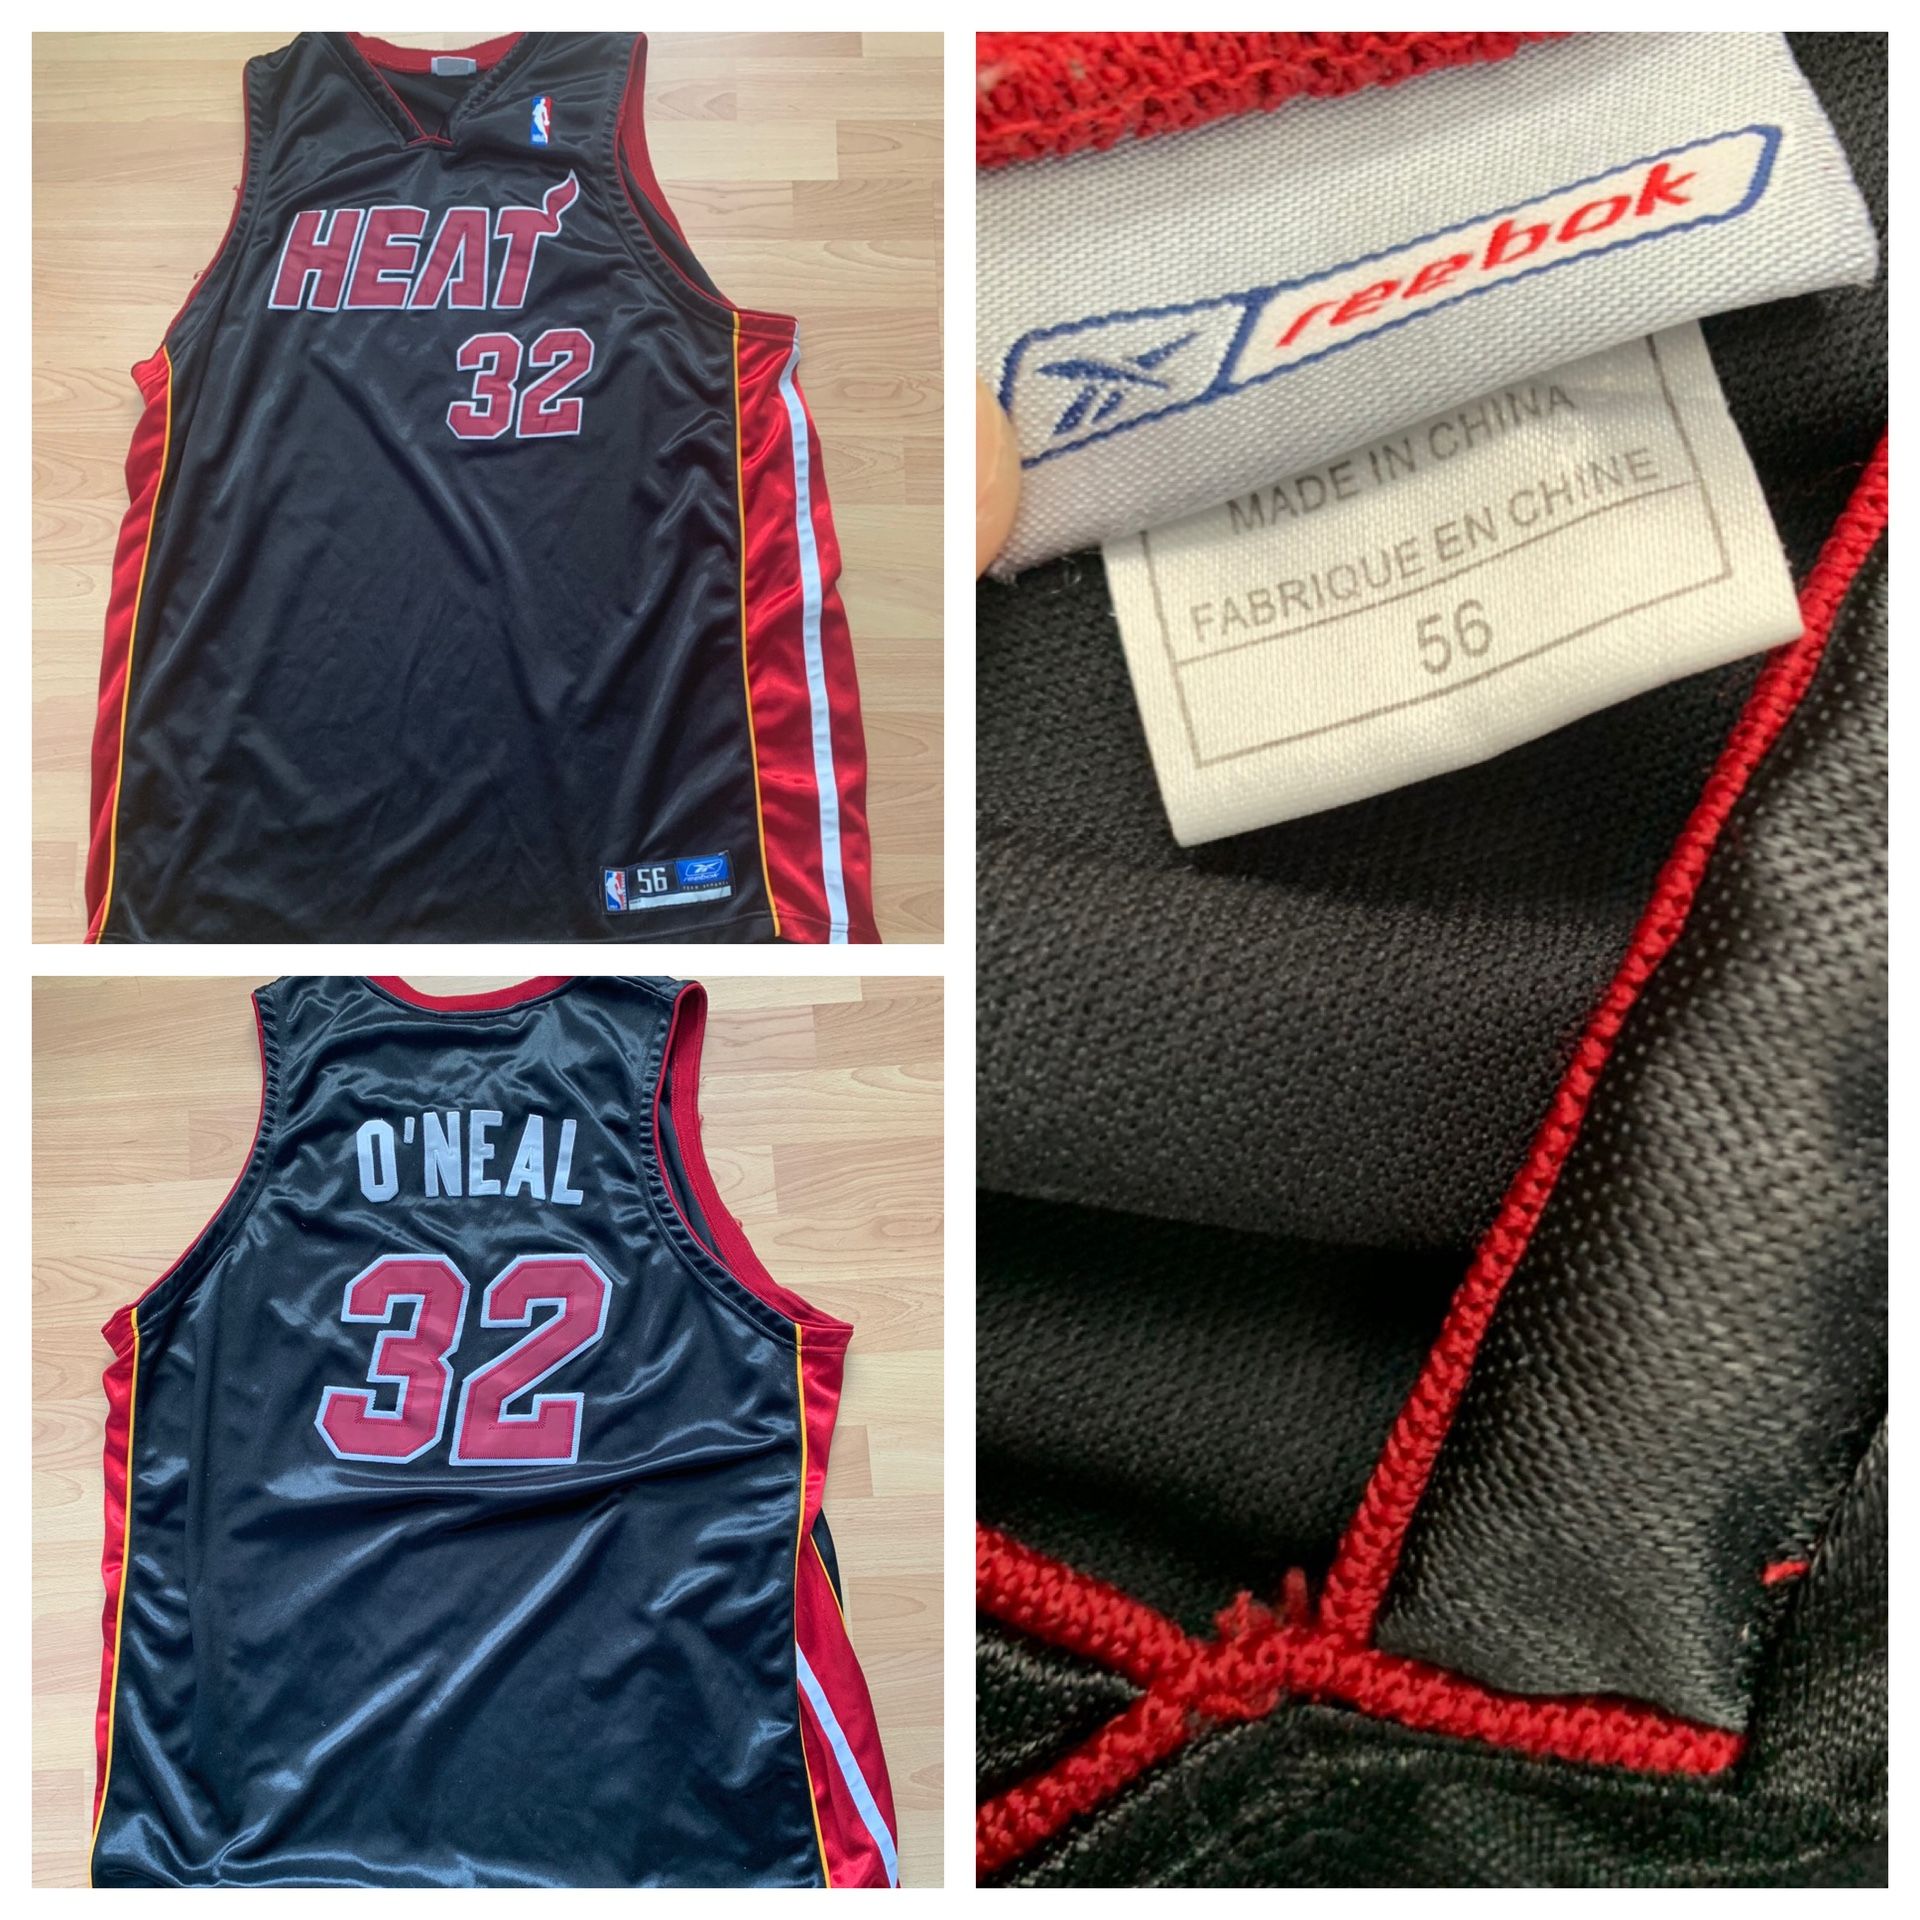 REEBOK Shaquille O'Neal #32 NBA Miami Heat Jersey men sport Size 3XL basketball